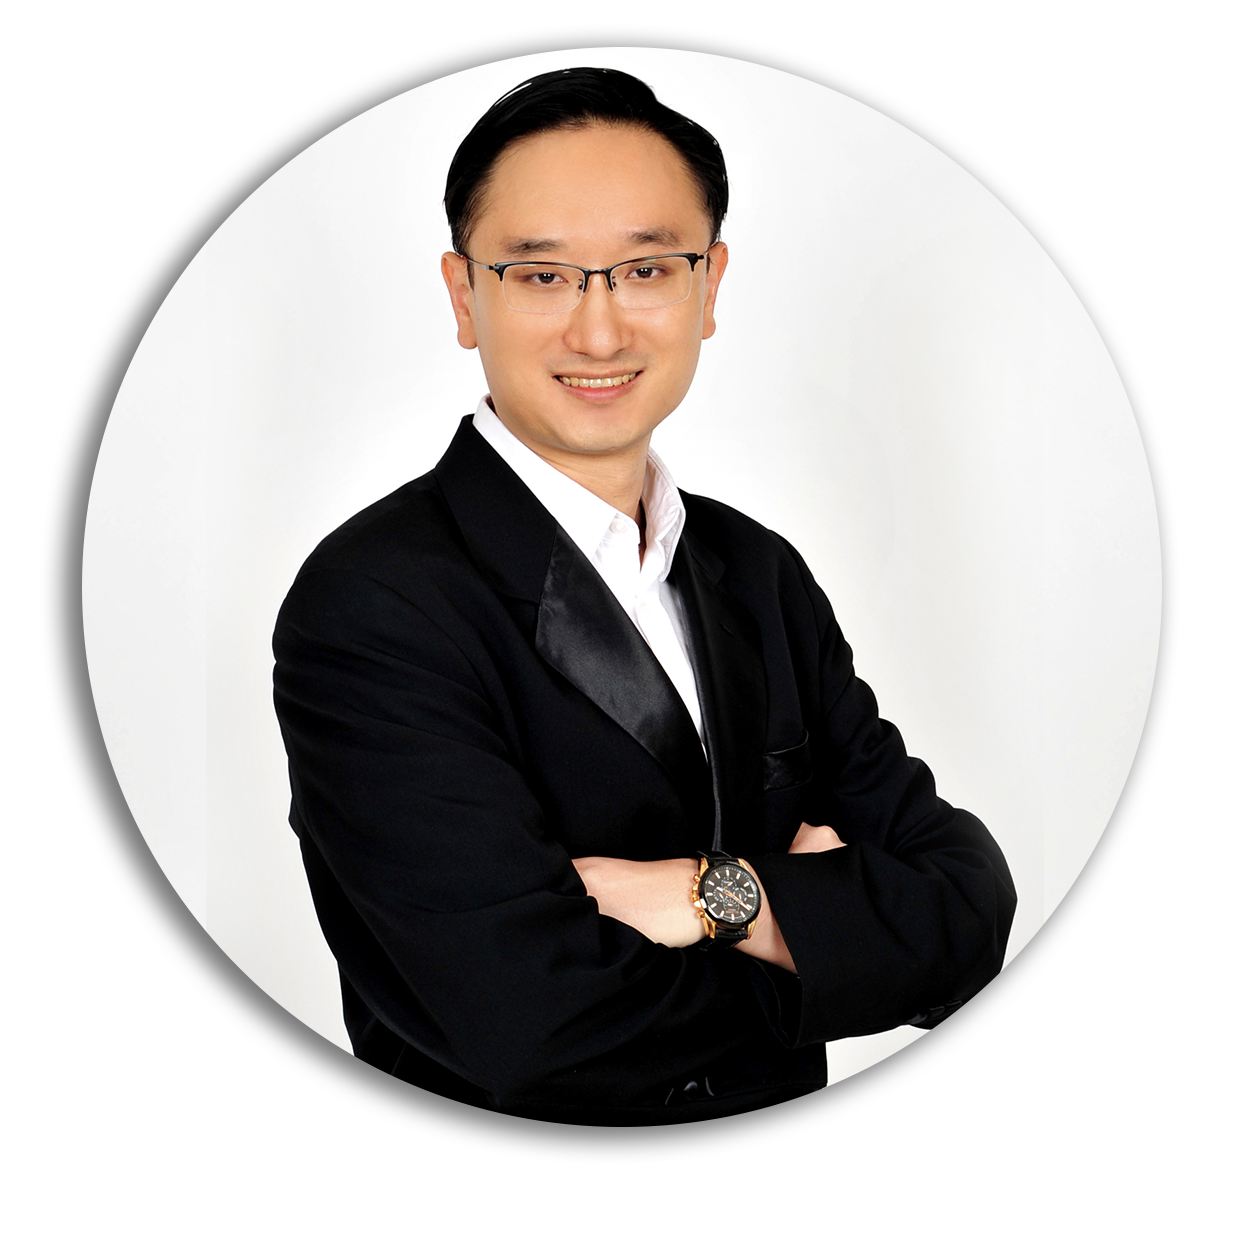 Edmund Ho - MBA student at DIMENSIONS Singapore